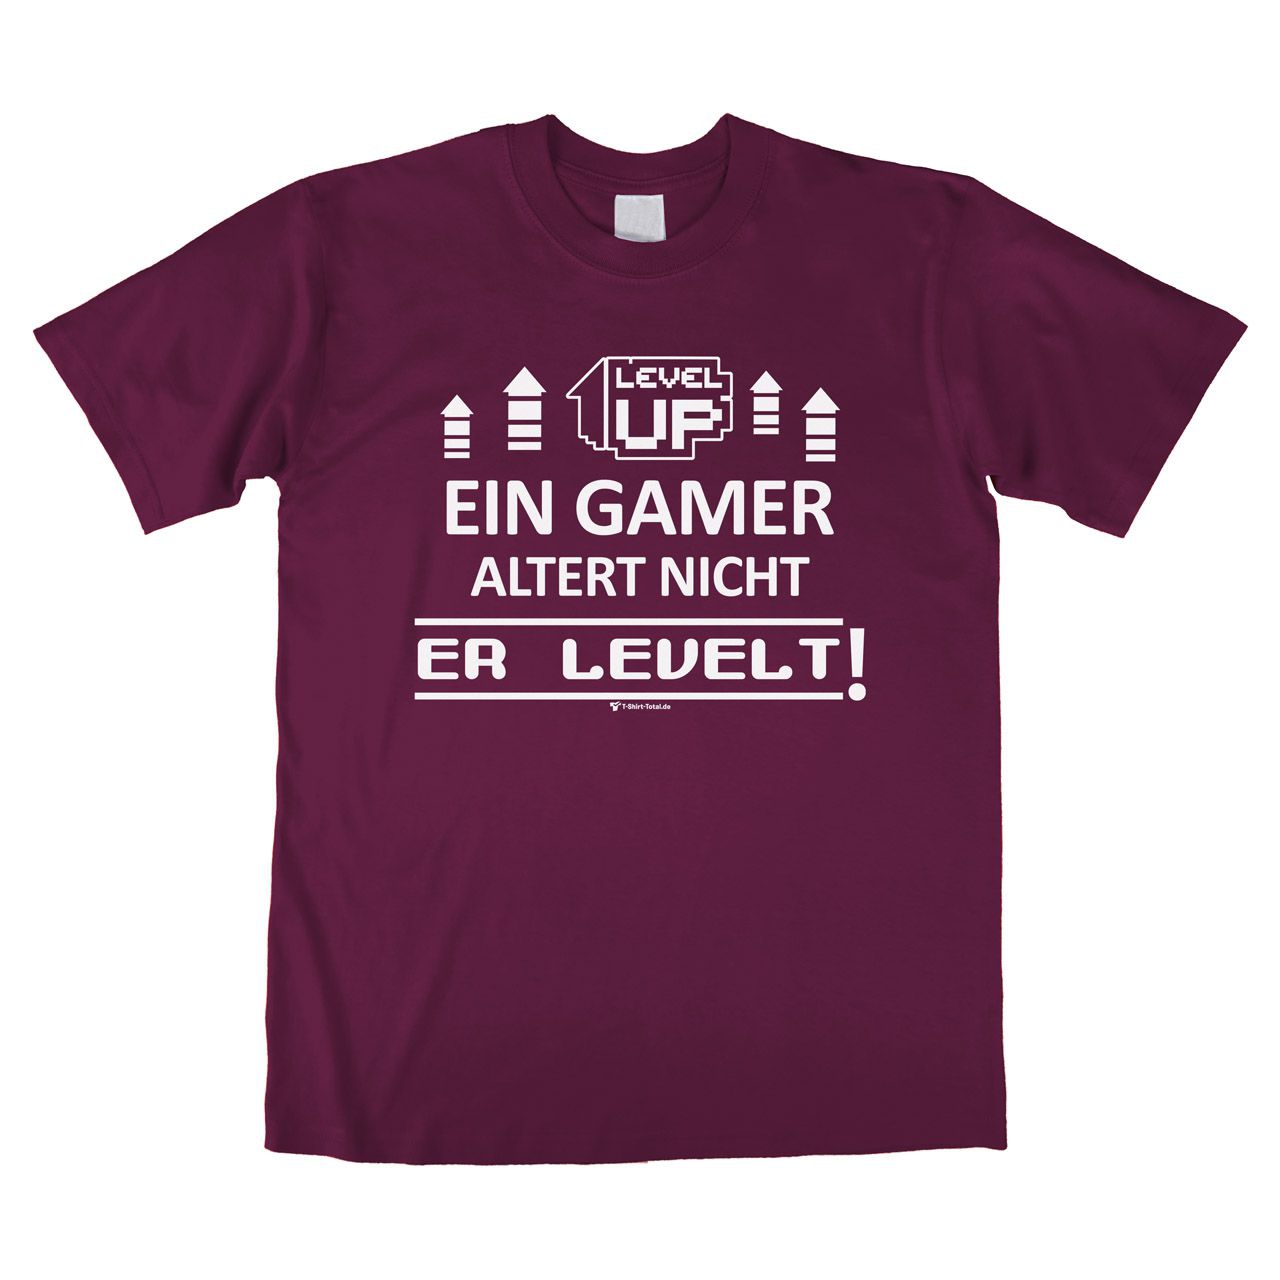 Ein Gamer levelt Unisex T-Shirt bordeaux Medium